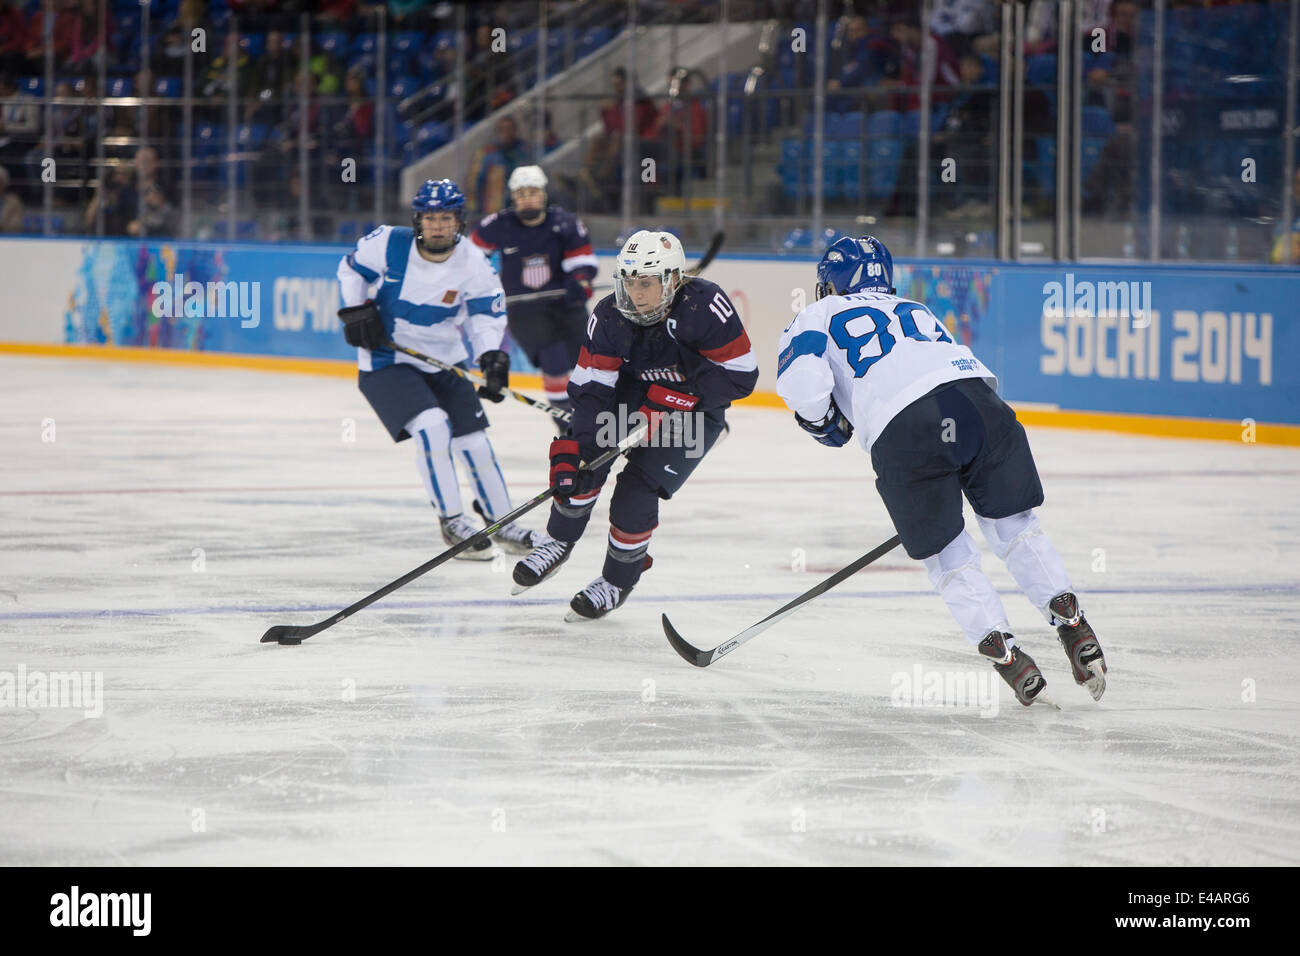 Meghan Duggan (USA) and Tea Villila (FIN) during ice hockey game at the Olympic Winter Games, Sochi 2014 Stock Photo